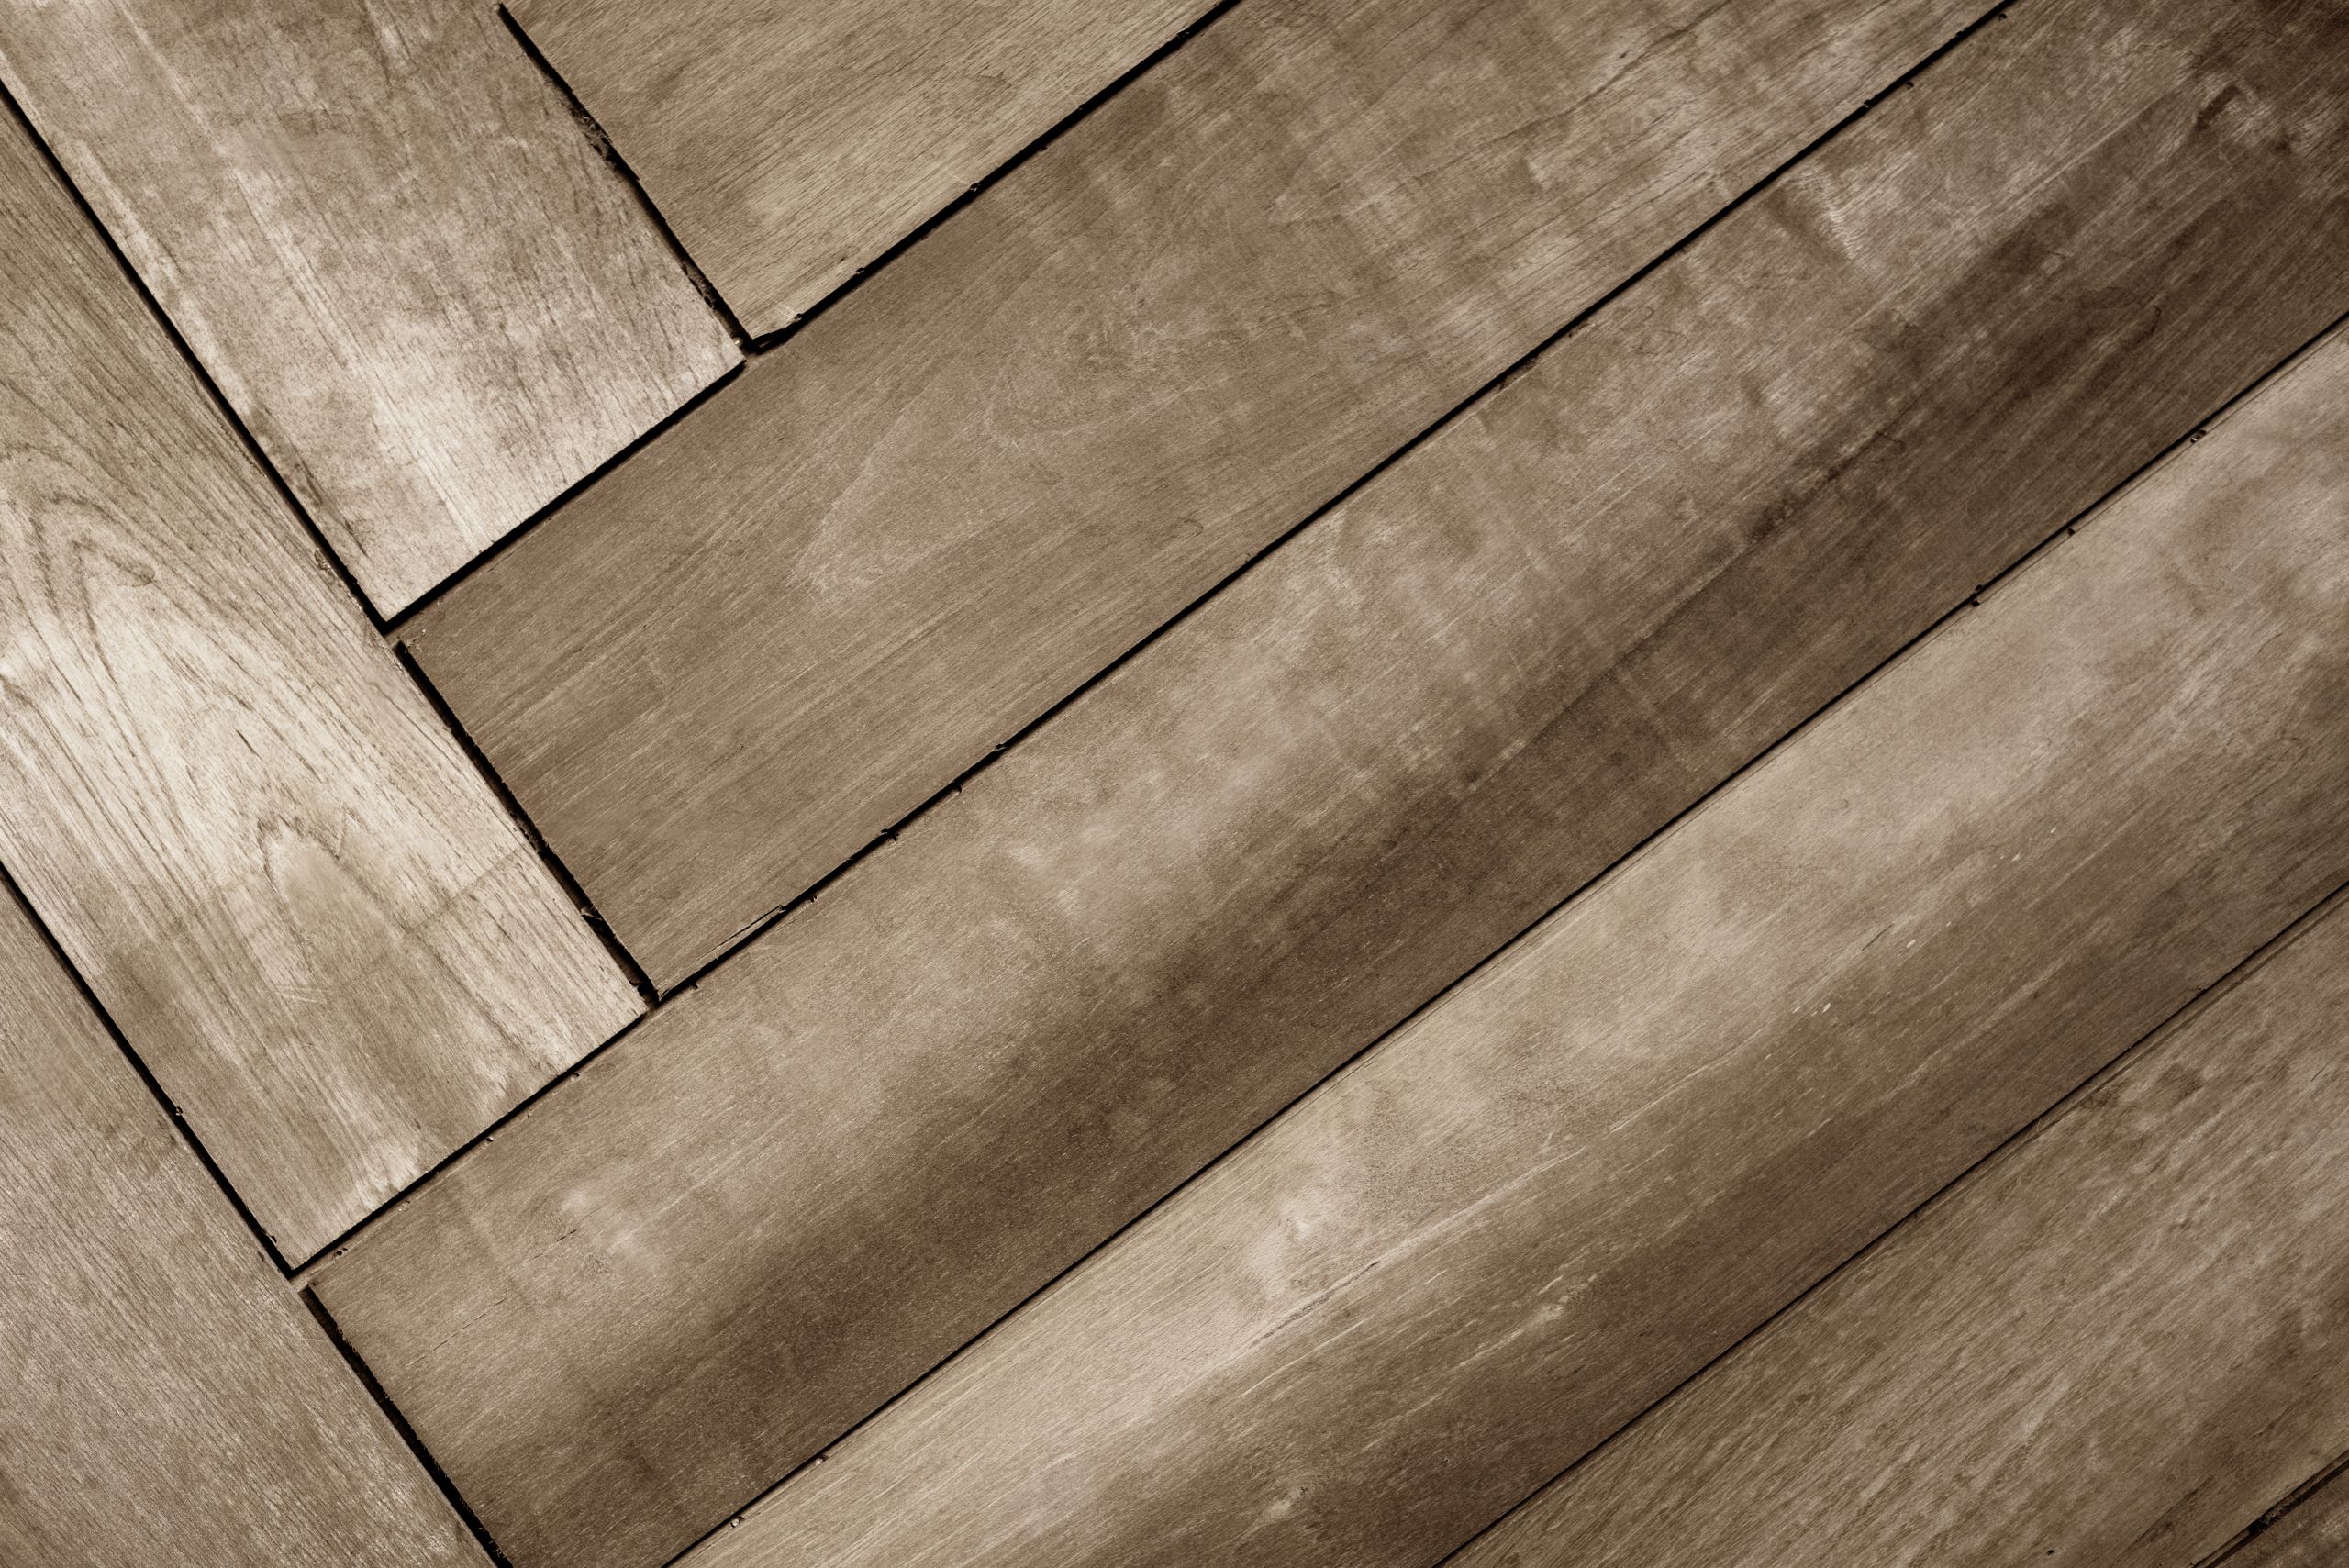 Fishbone Patterned Wood Flooring Warrington